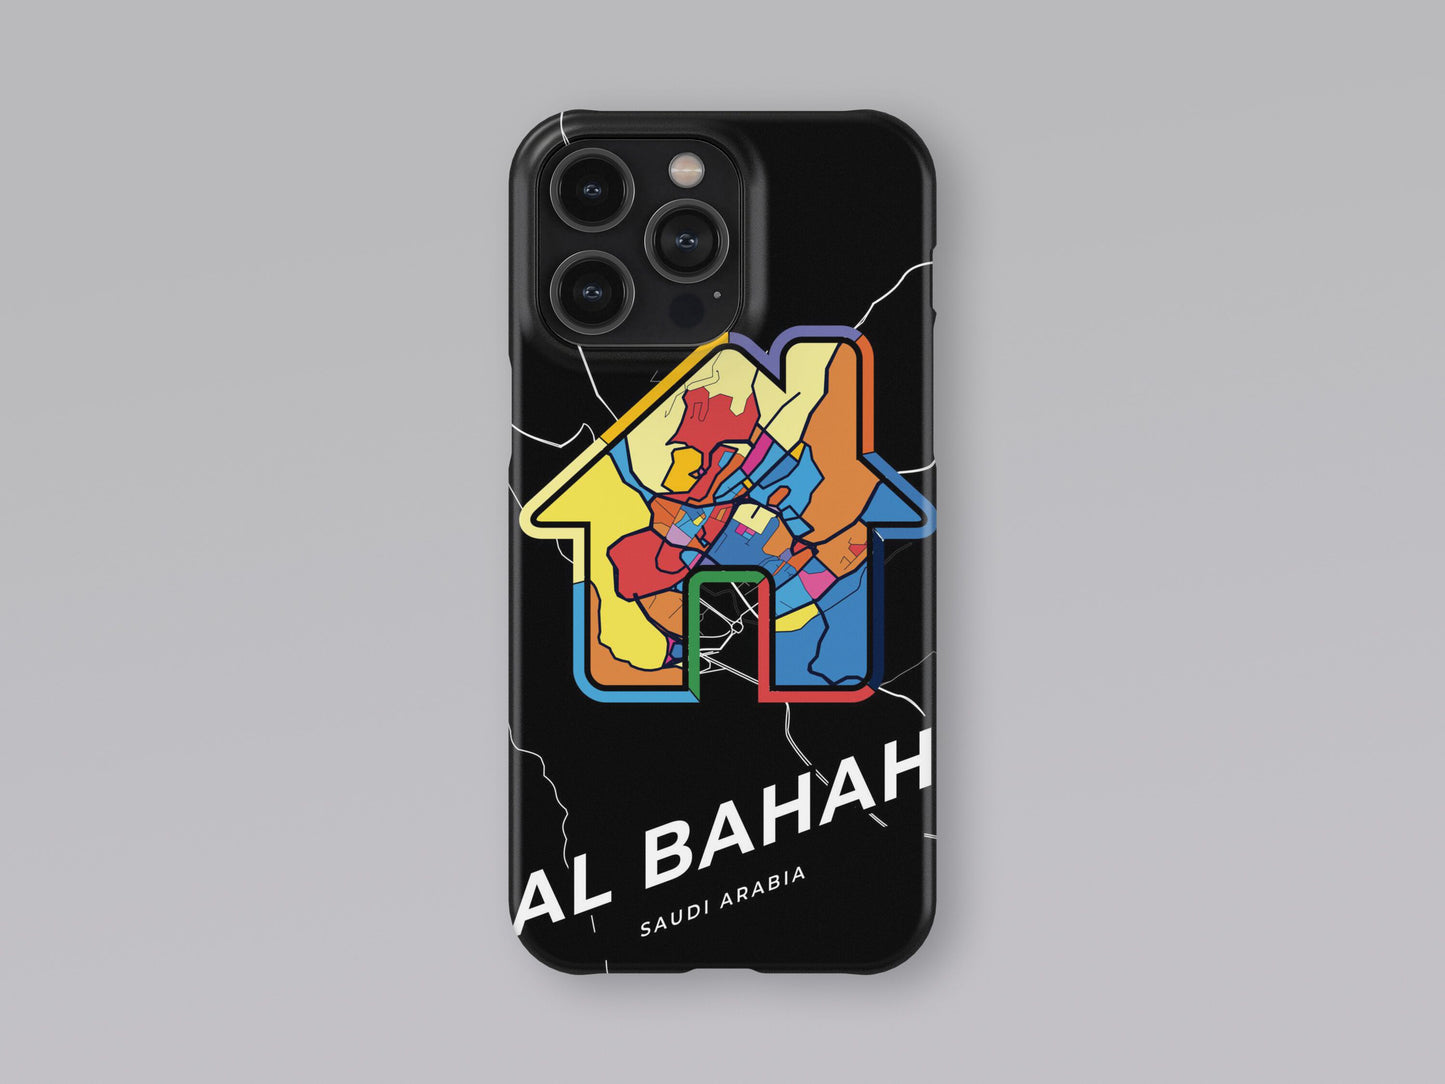 Al Bahah Saudi Arabia slim phone case with colorful icon. Birthday, wedding or housewarming gift. Couple match cases. 3